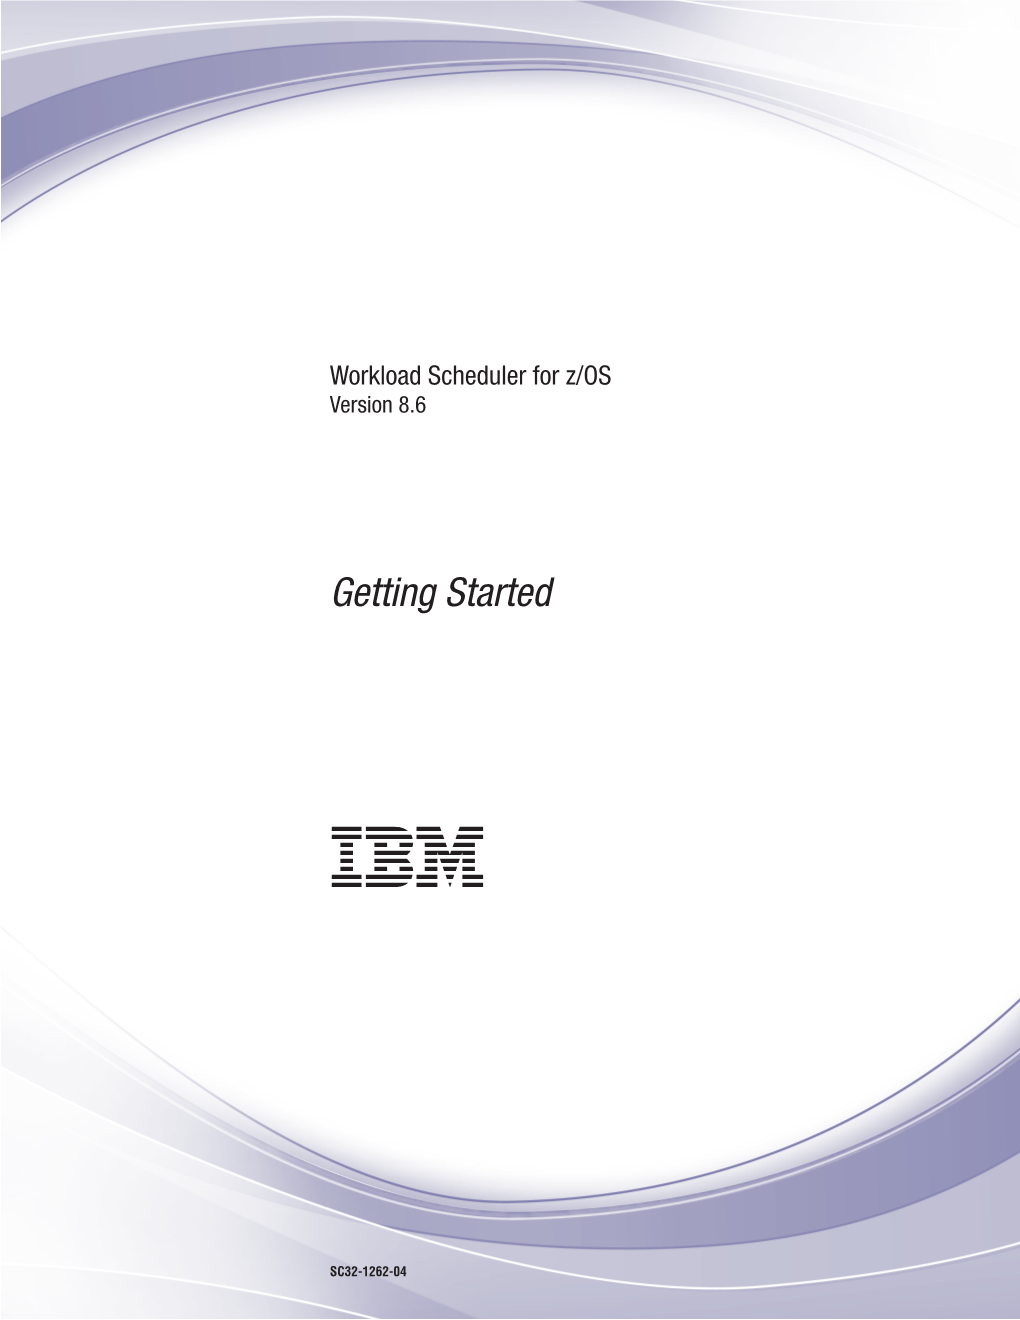 IBM Tivoli Workload Scheduler for Z/OS: Getting Started Figures